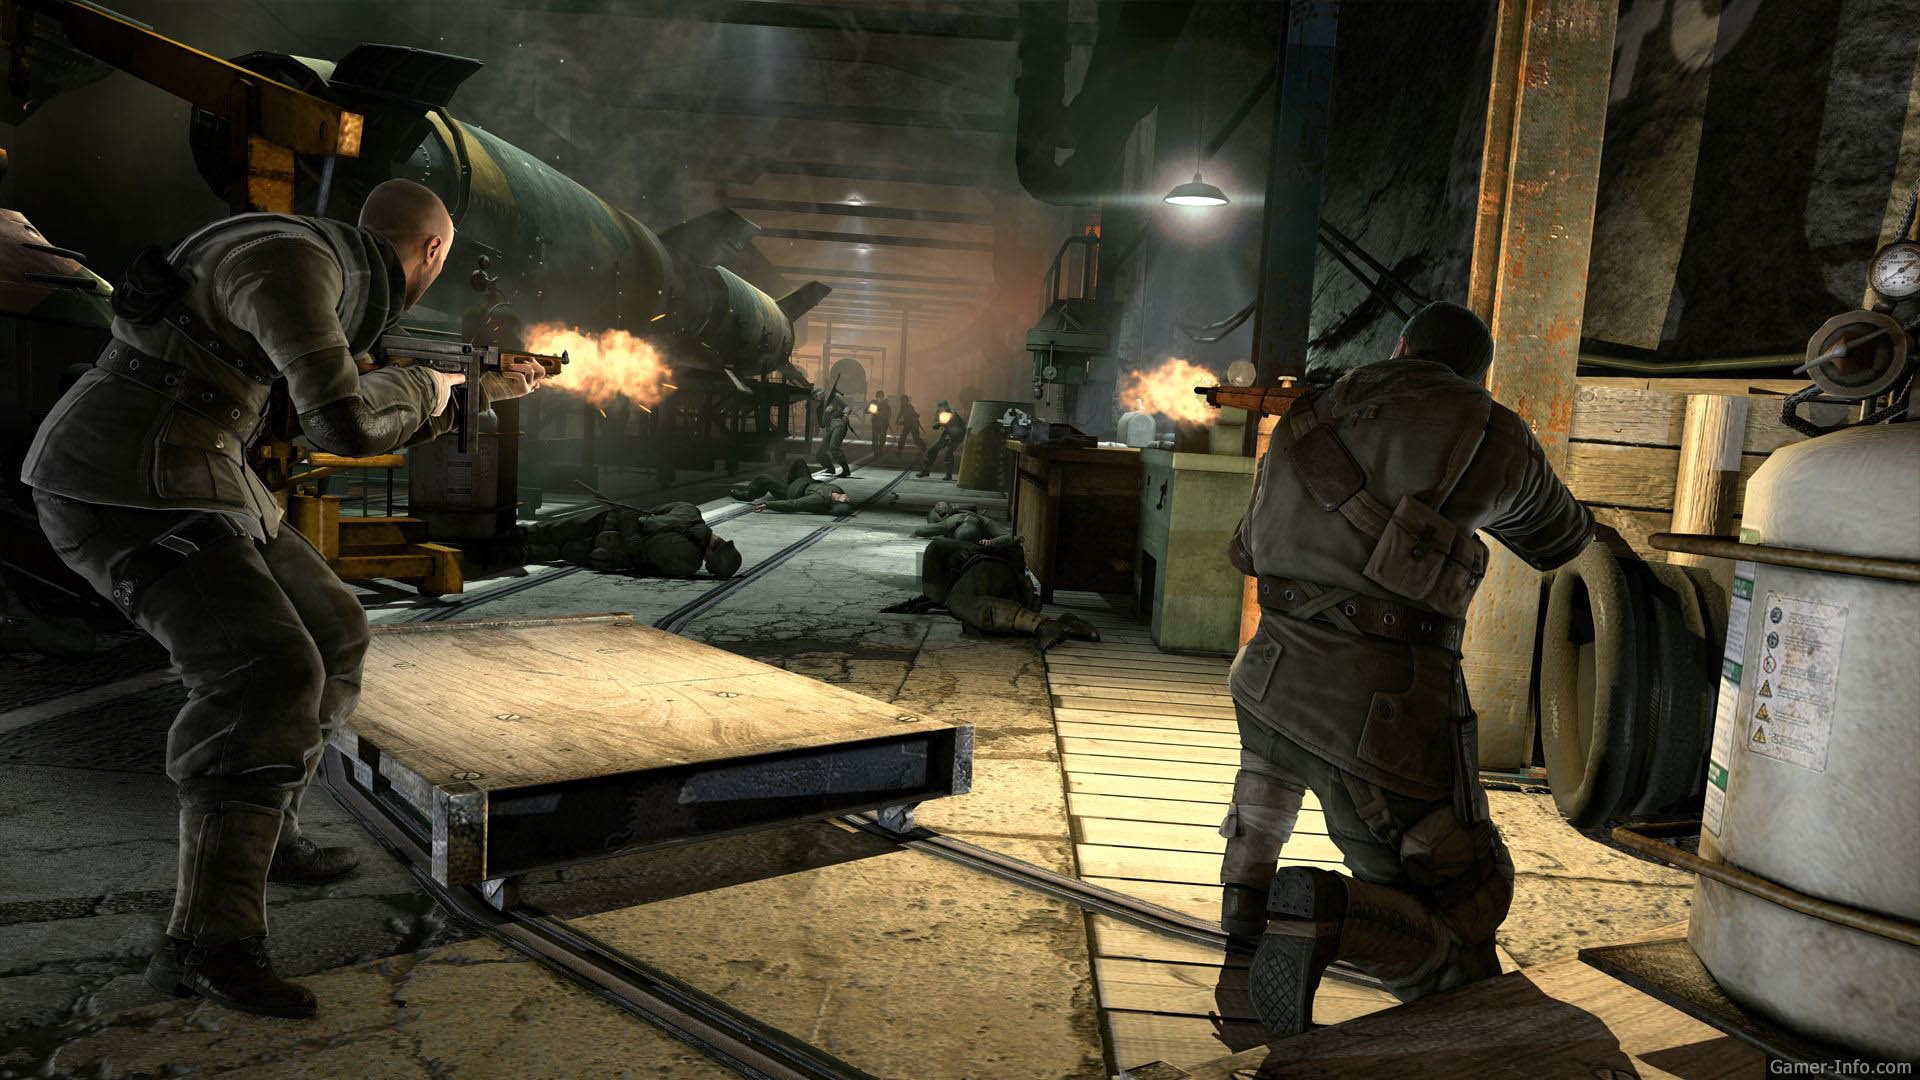 Igra. Sniper Elite v2. Sniper Elite v2 Xbox 360. Снайпер Элит 2. Sniper Elite v2 2012.